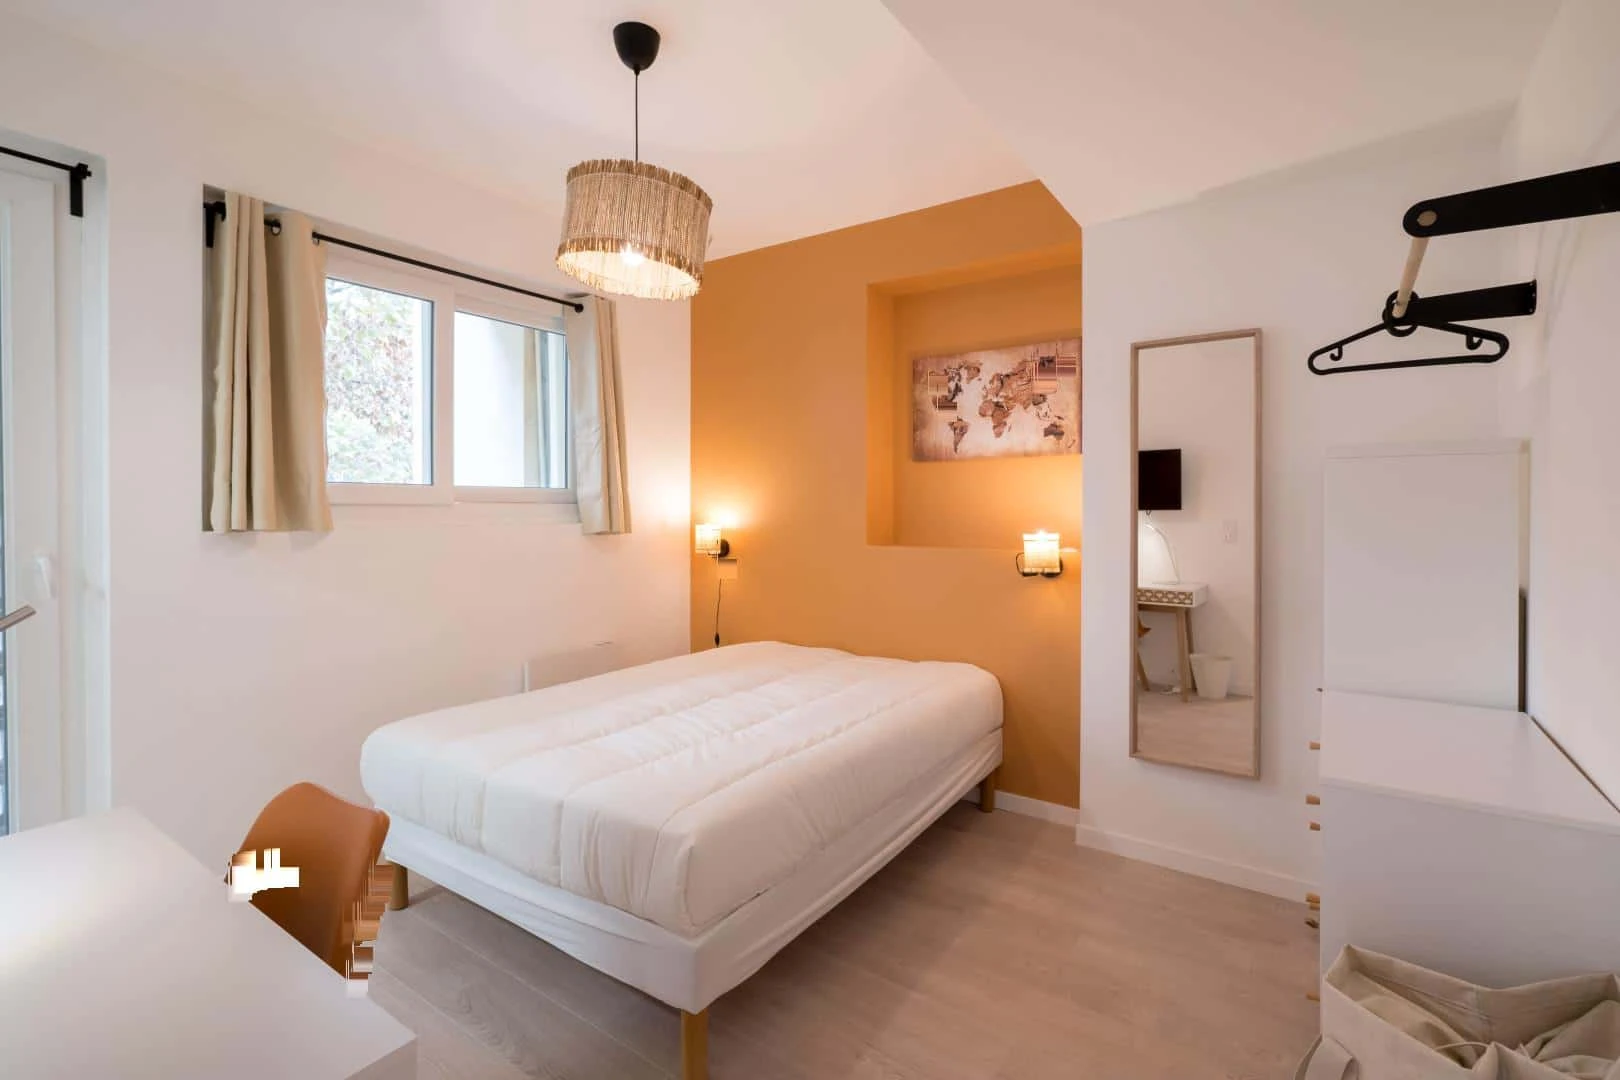 Habitación privada barata en Toulon